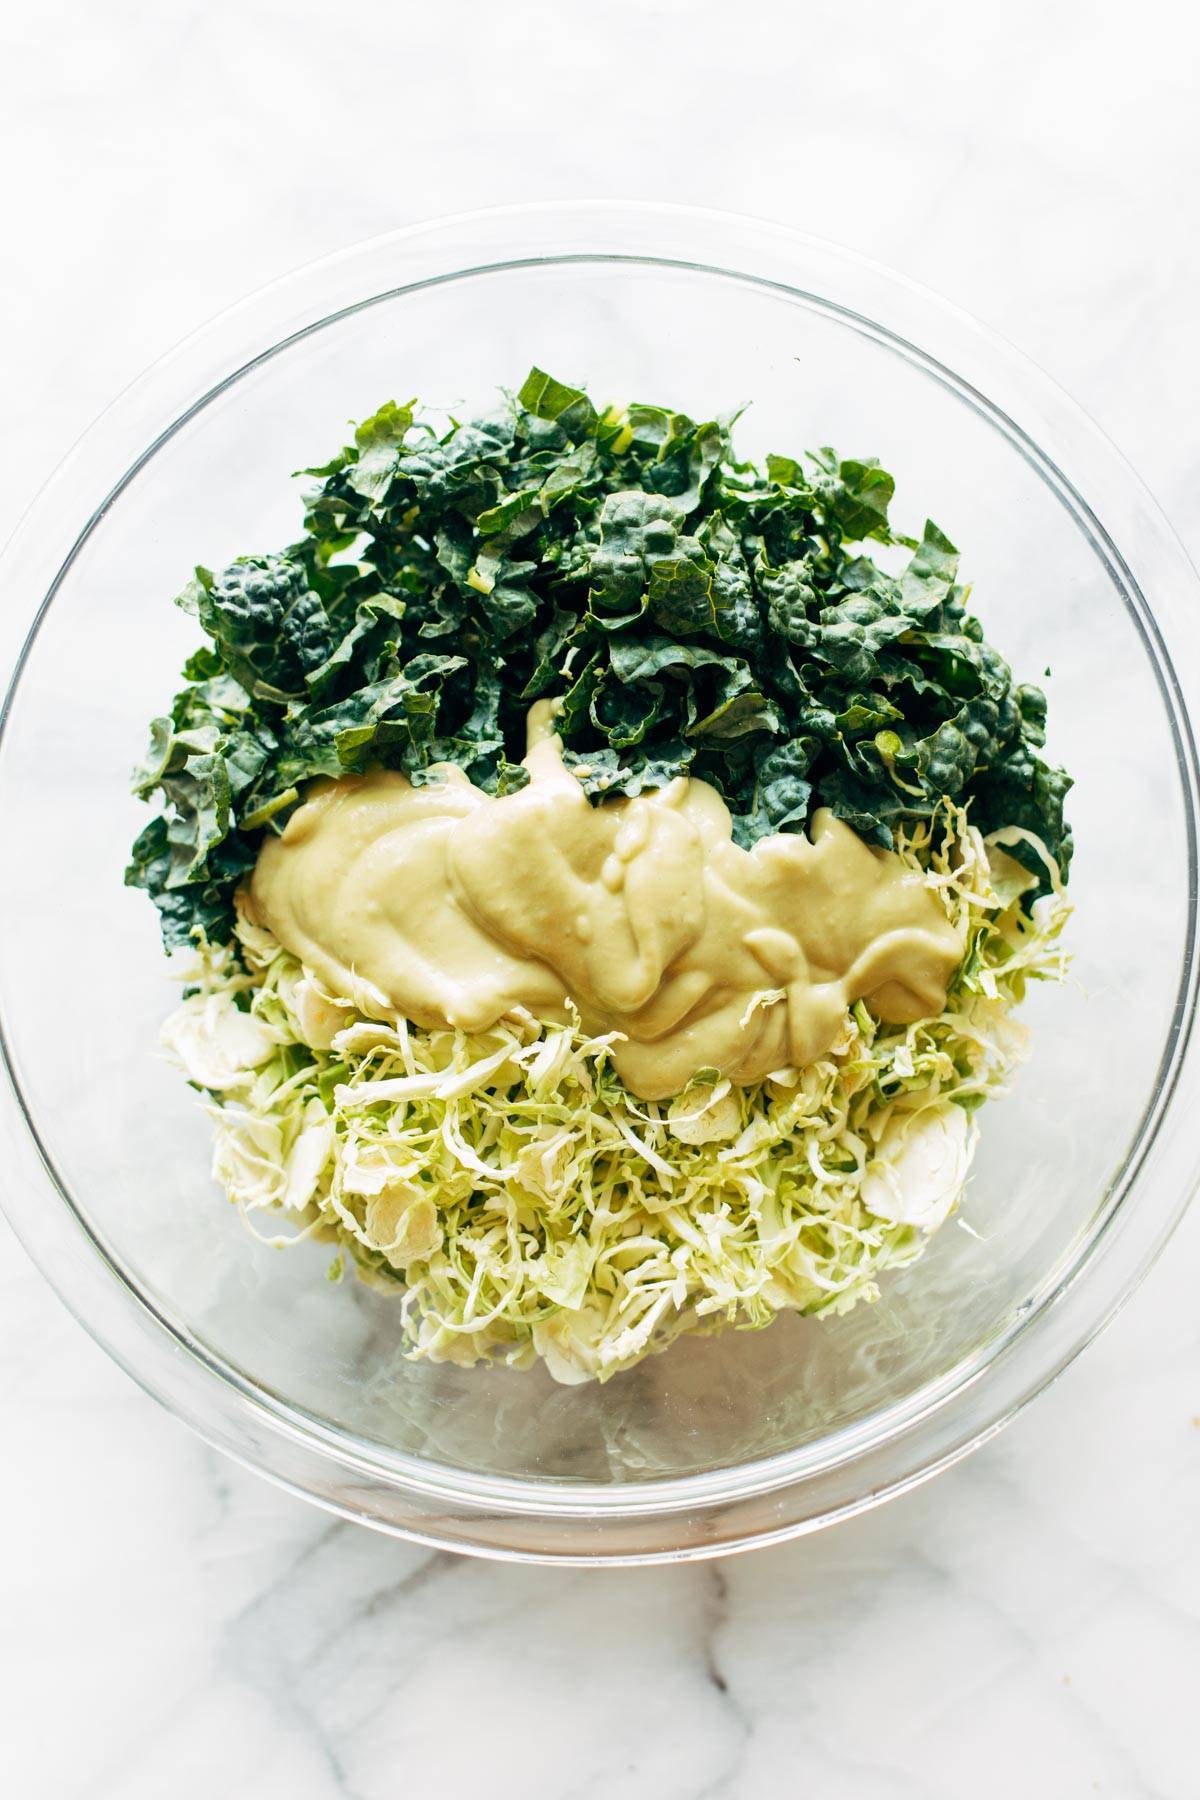 Ingredients for Brussels & Kale Caesar in a bowl.